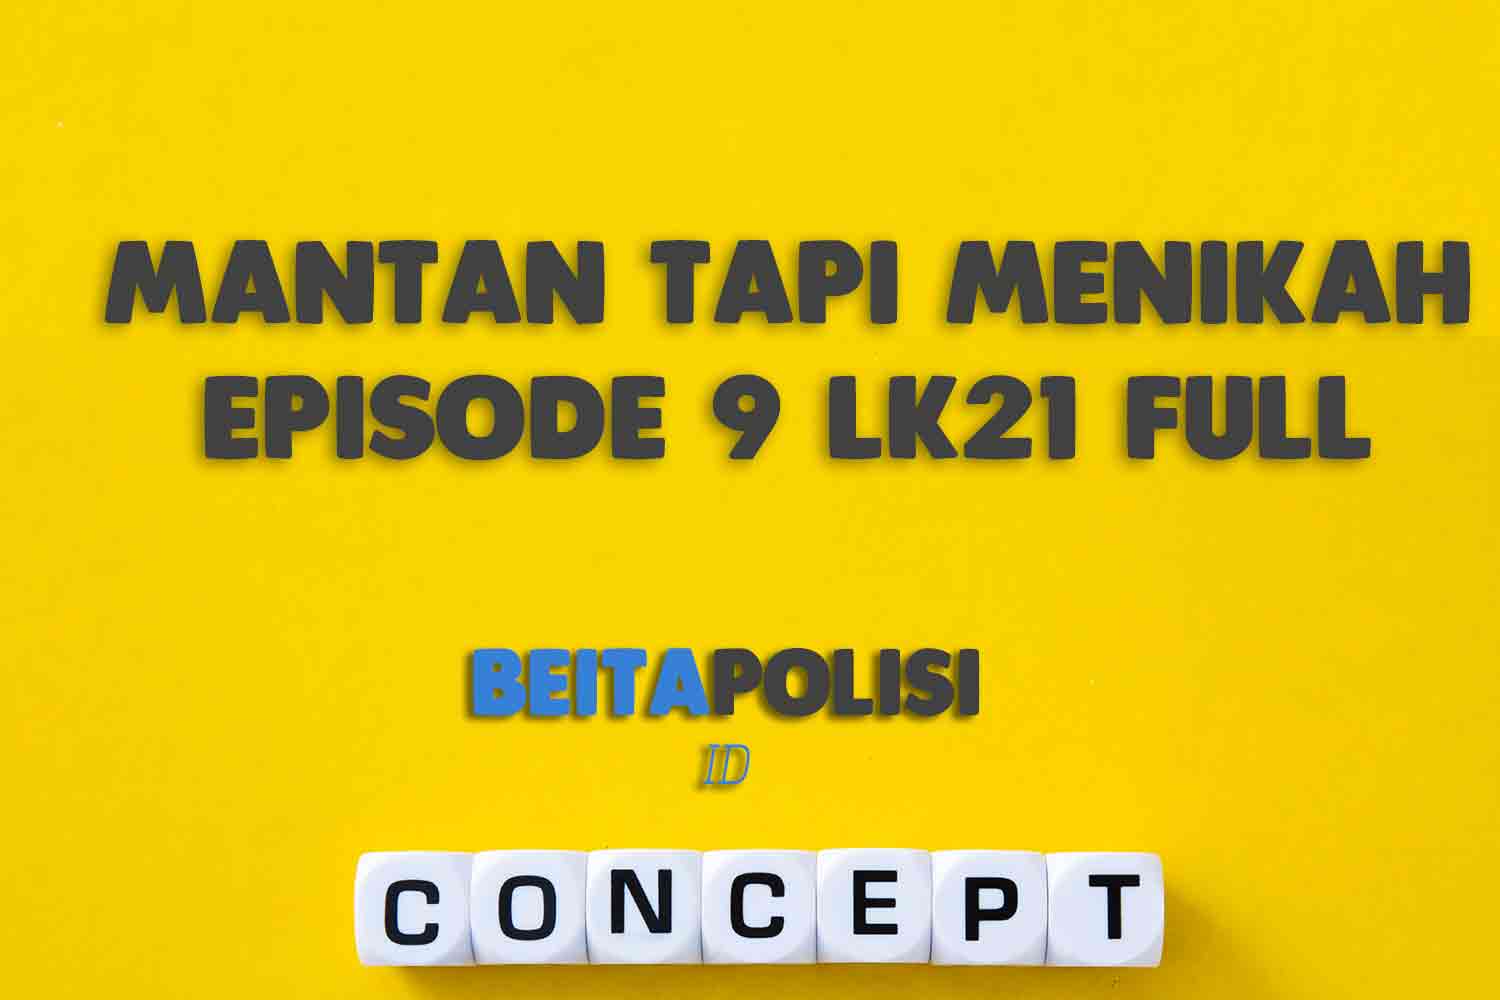 Mantan Tapi Menikah Episode 9 Lk21 Full Movie